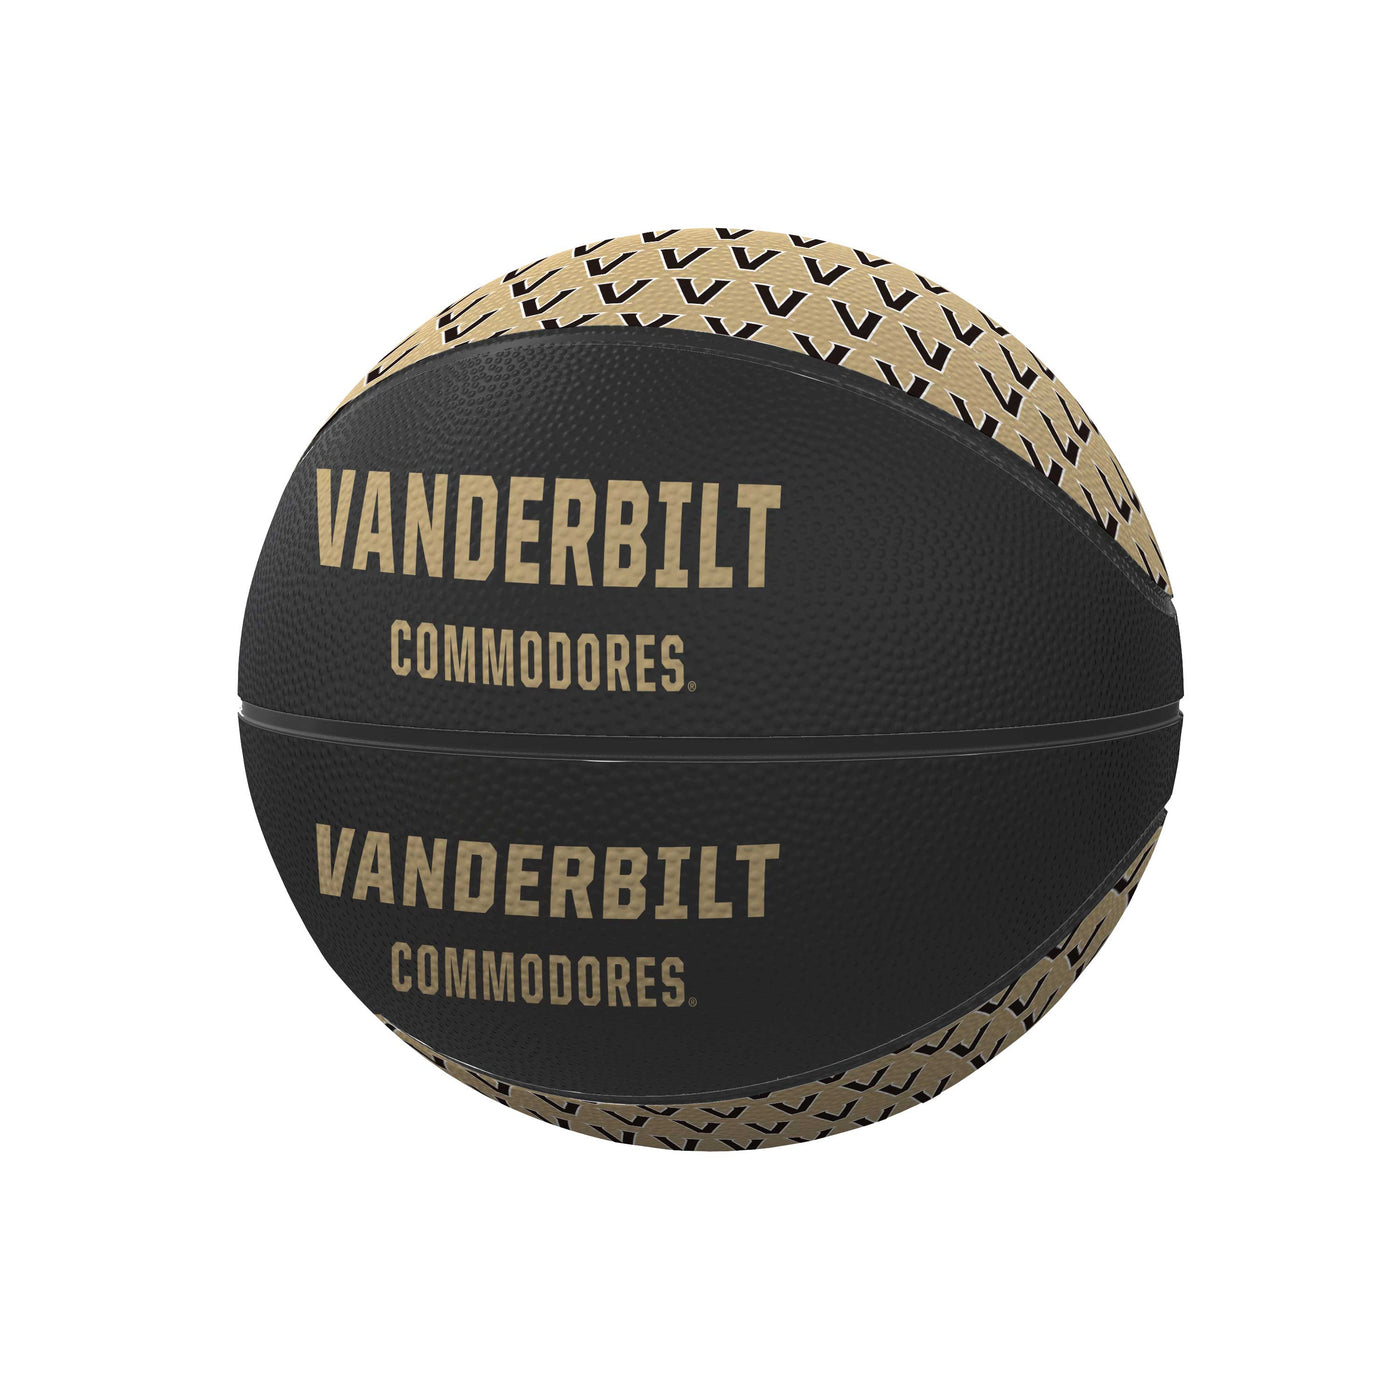 Vanderbilt Repeating Logo Mini-Size Rubber Basketball